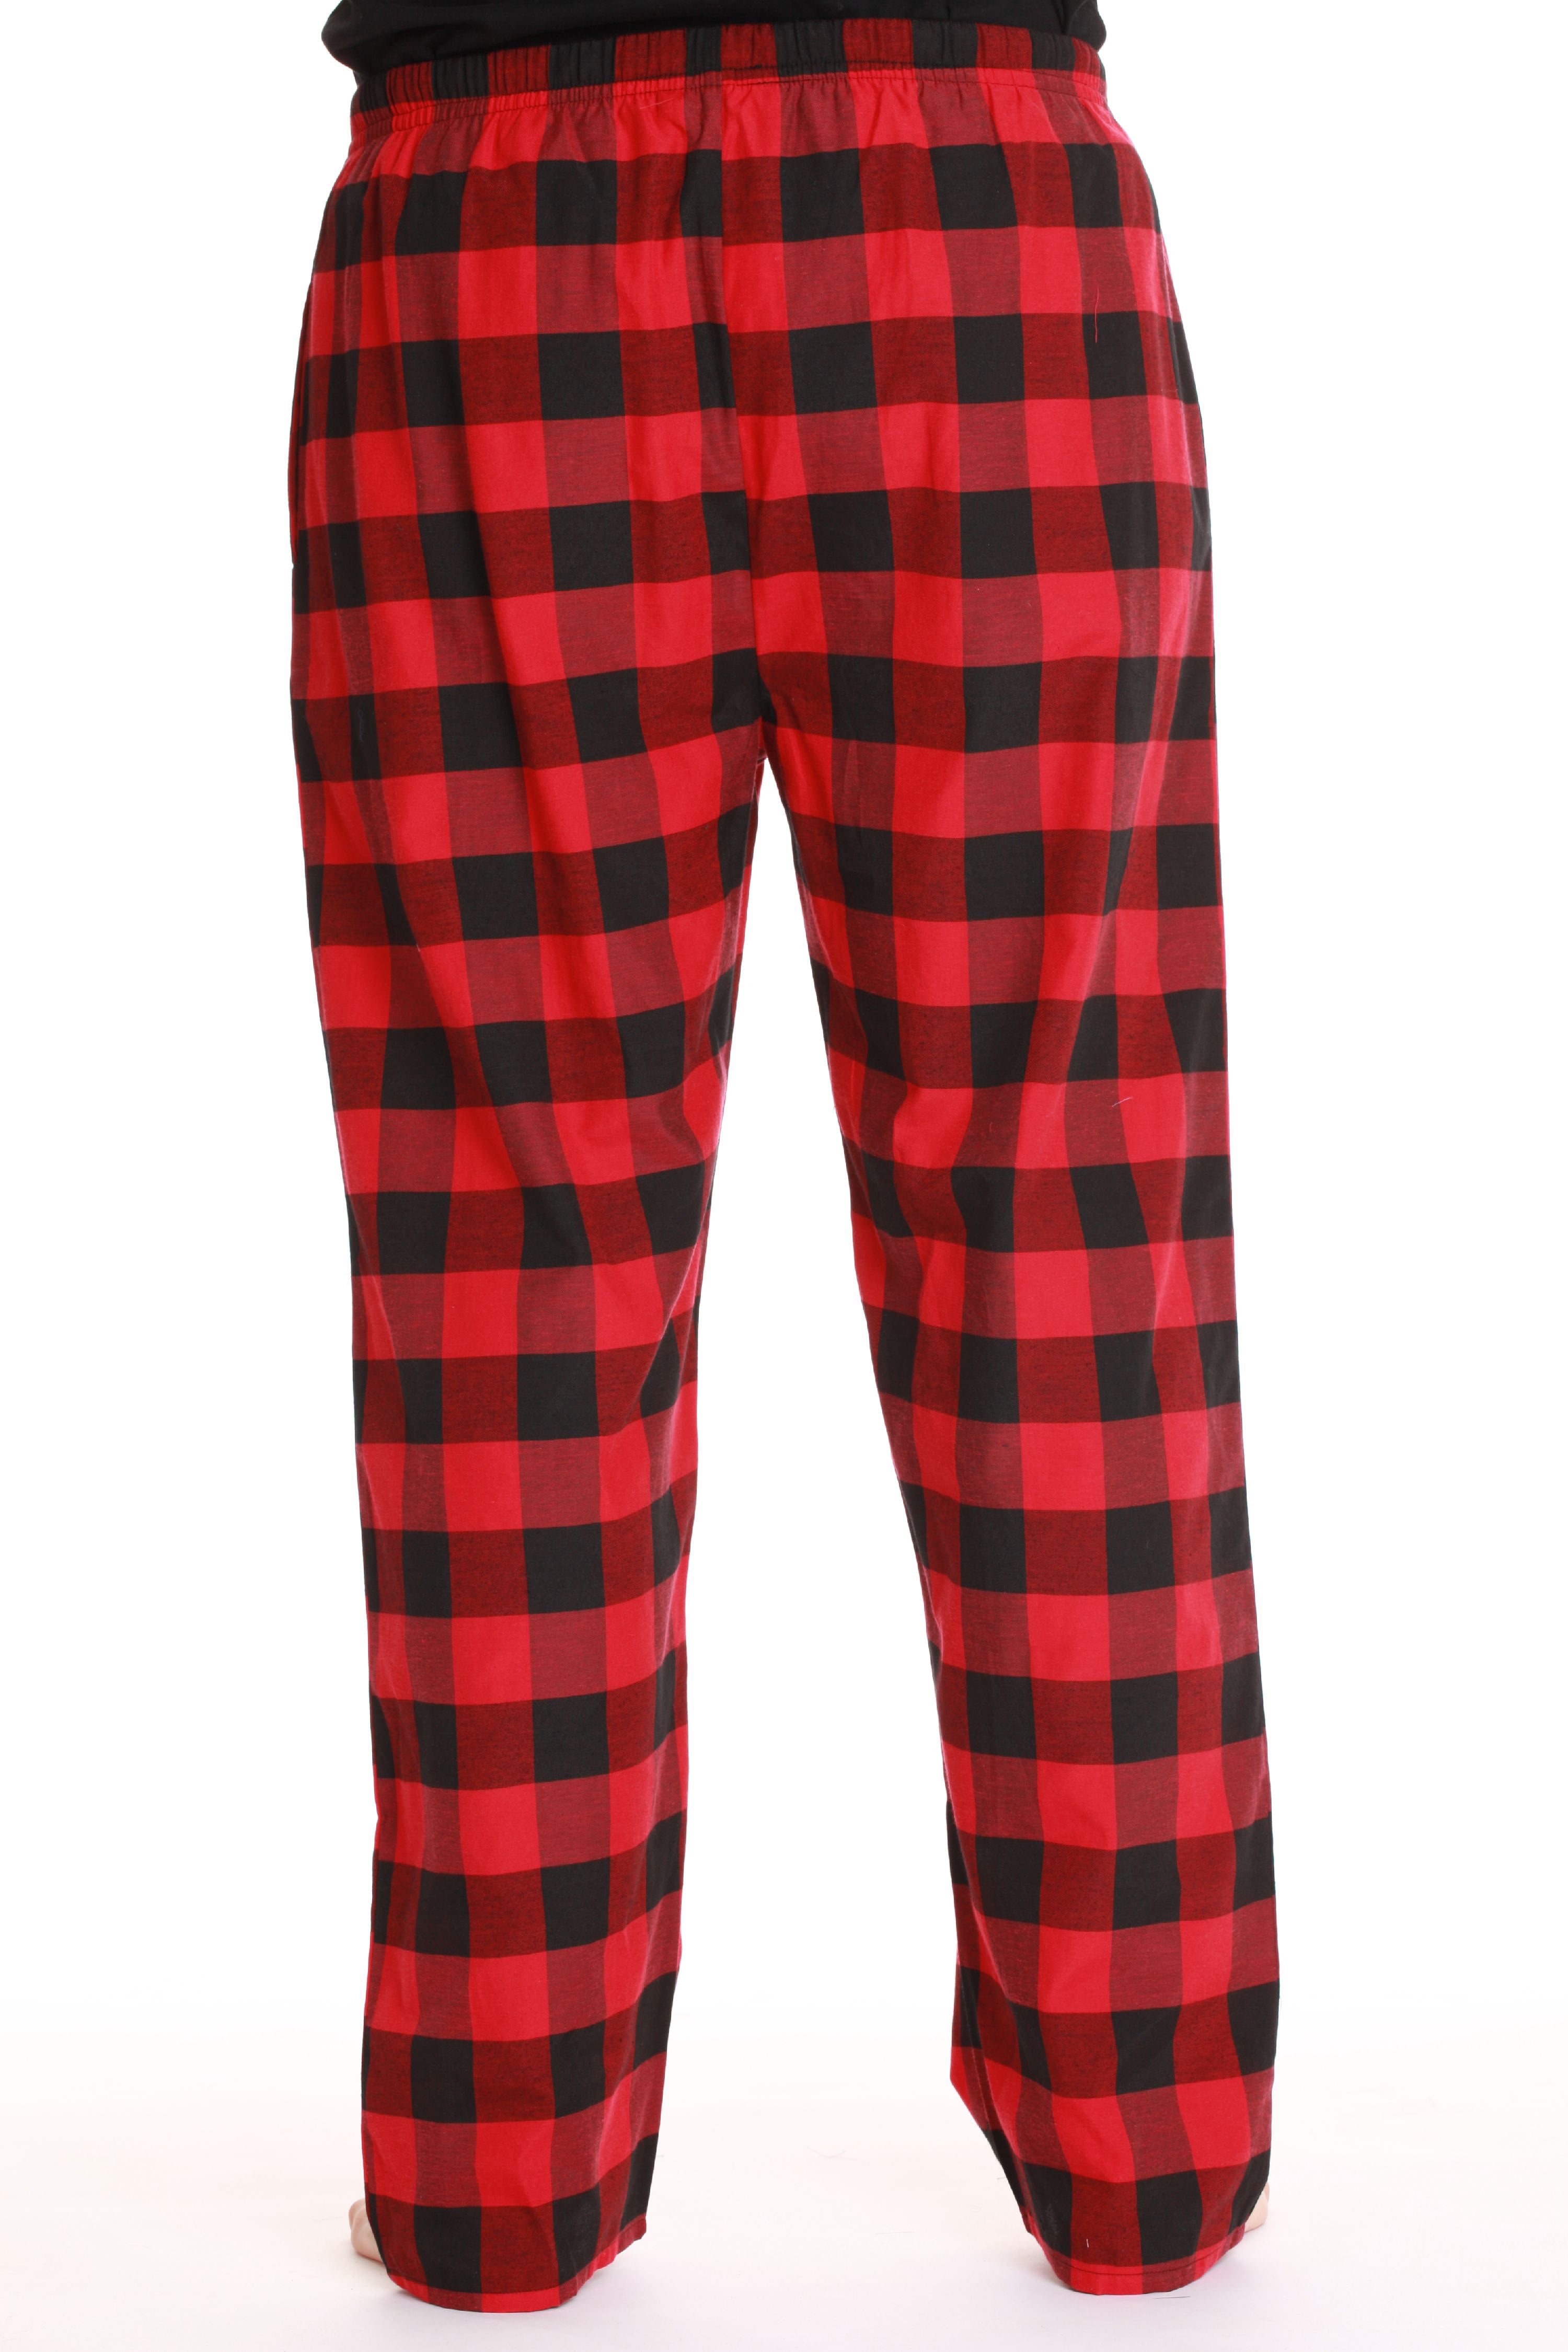 #followme Mens Pajama Pants Pajamas for Men (Black Red Buffalo